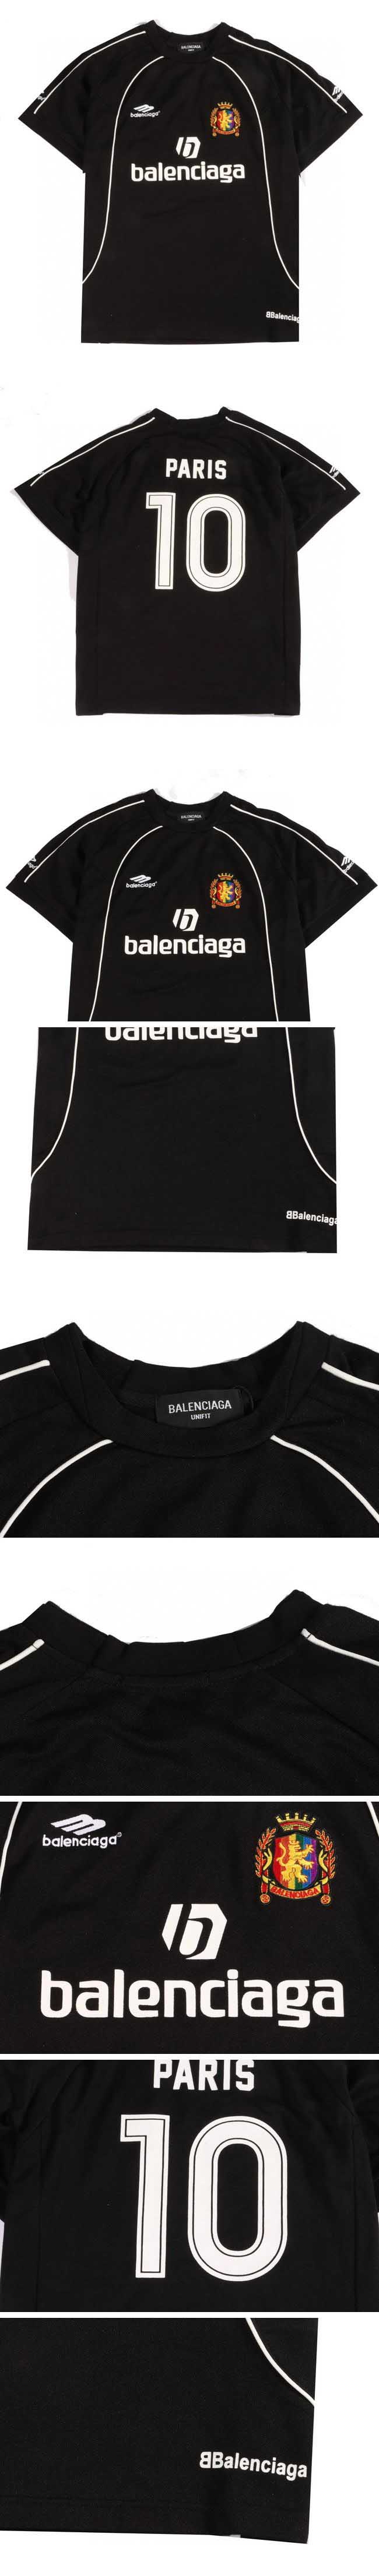 Balenciaga Football Game Shirt Black バレンシアガ フットボール サッカー ゲームシャツ ブラック